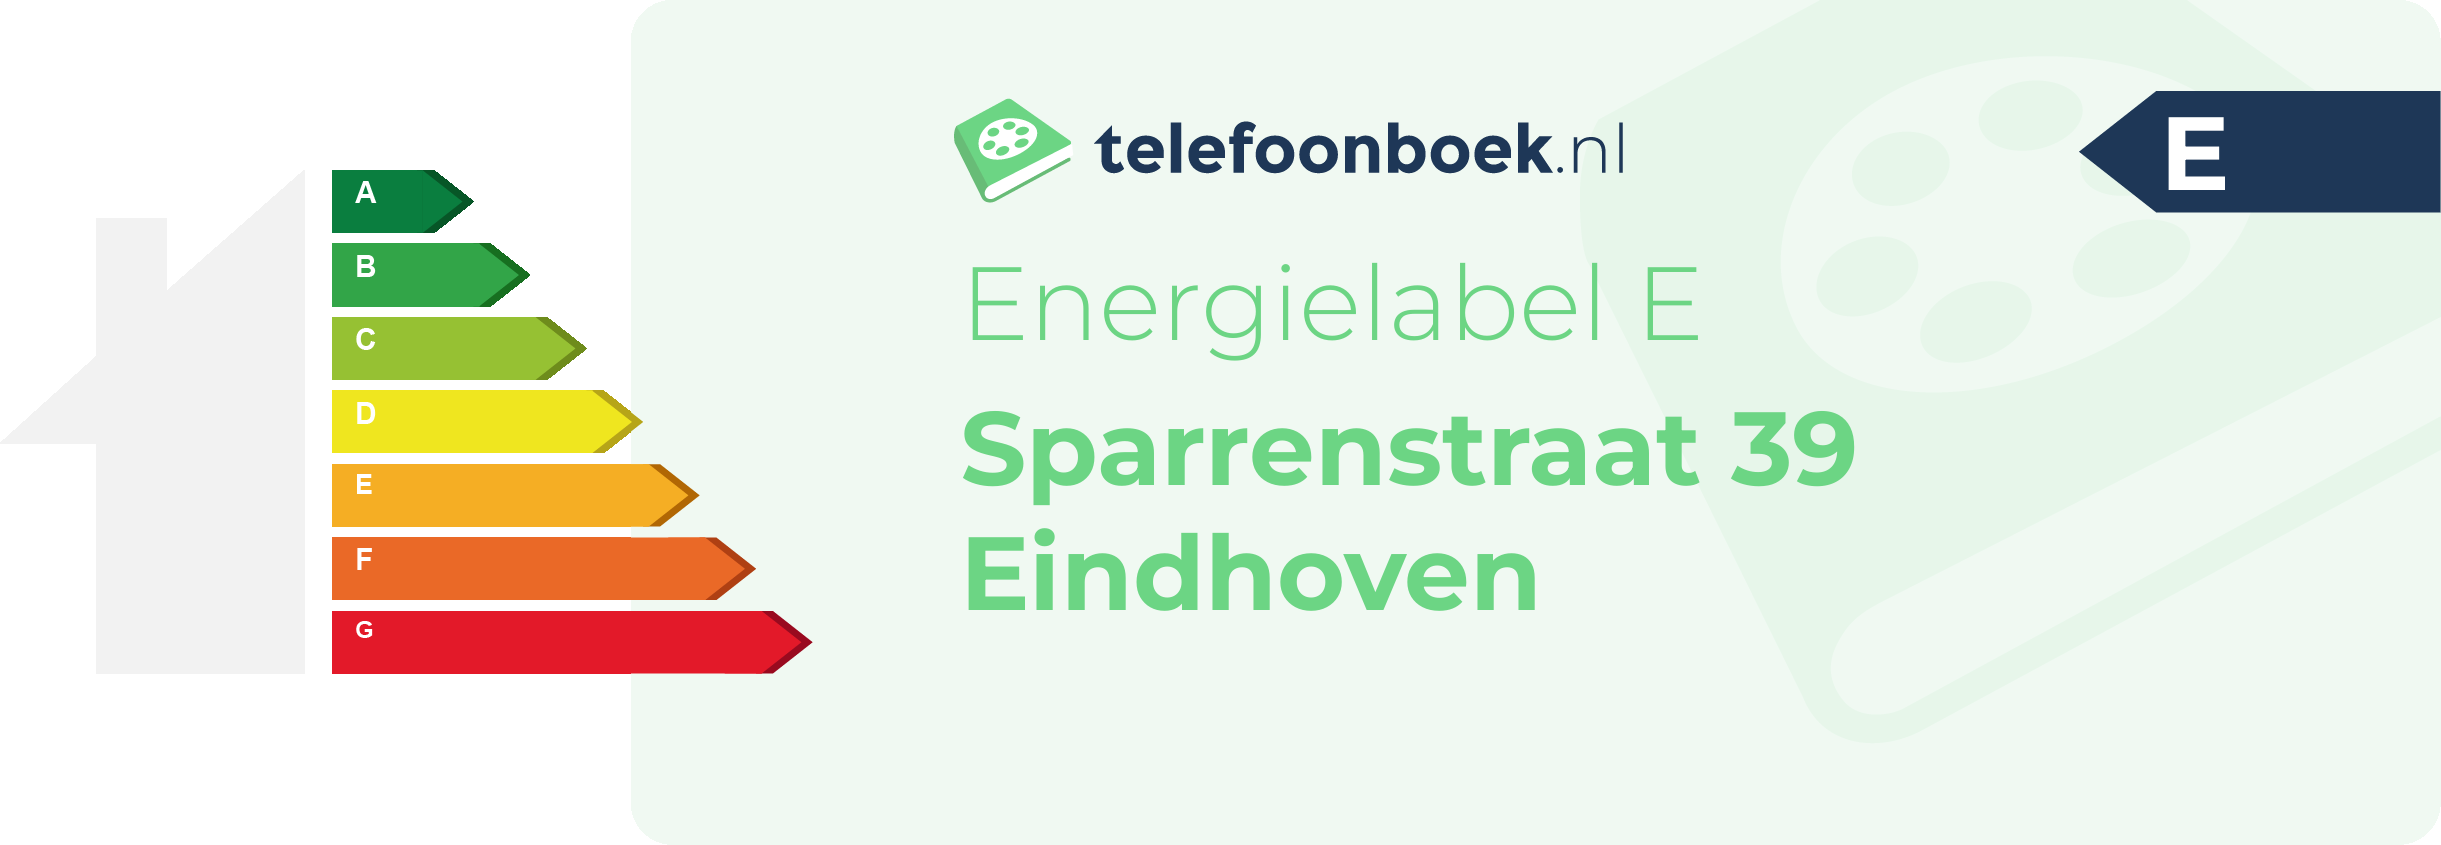 Energielabel Sparrenstraat 39 Eindhoven